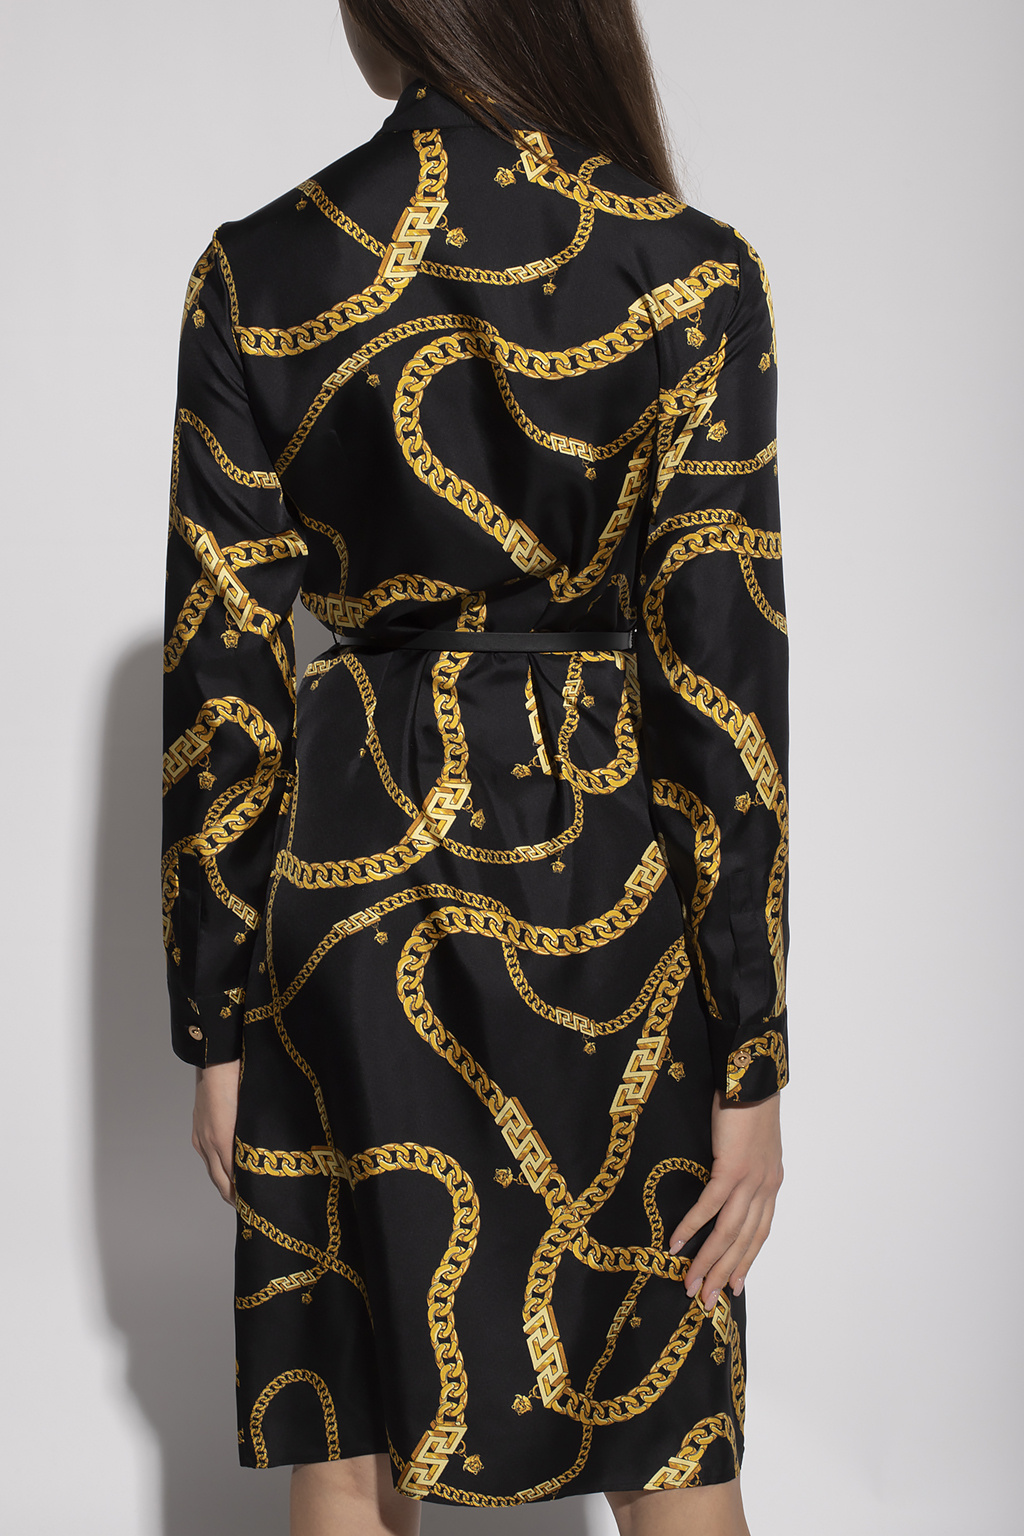 Versace Silk Com dress